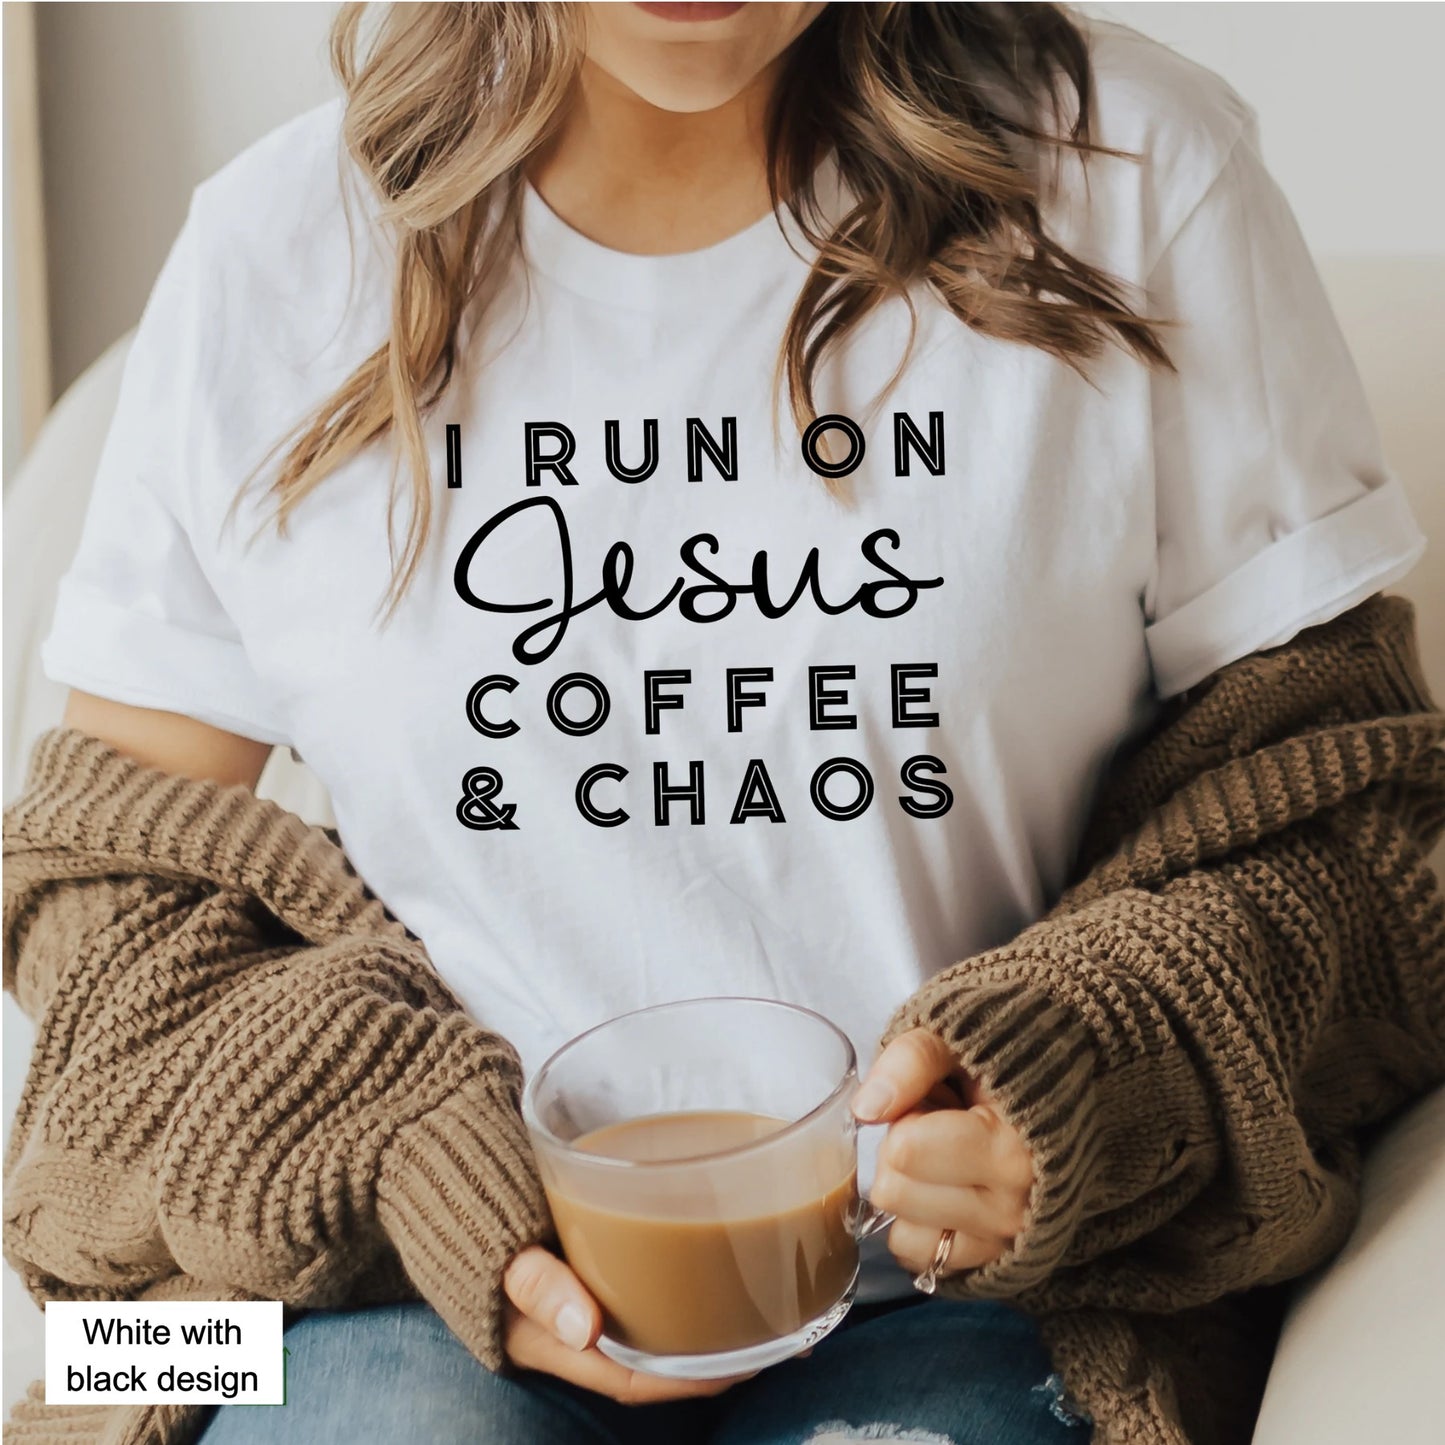 Run on Jesus Coffee and Chaos